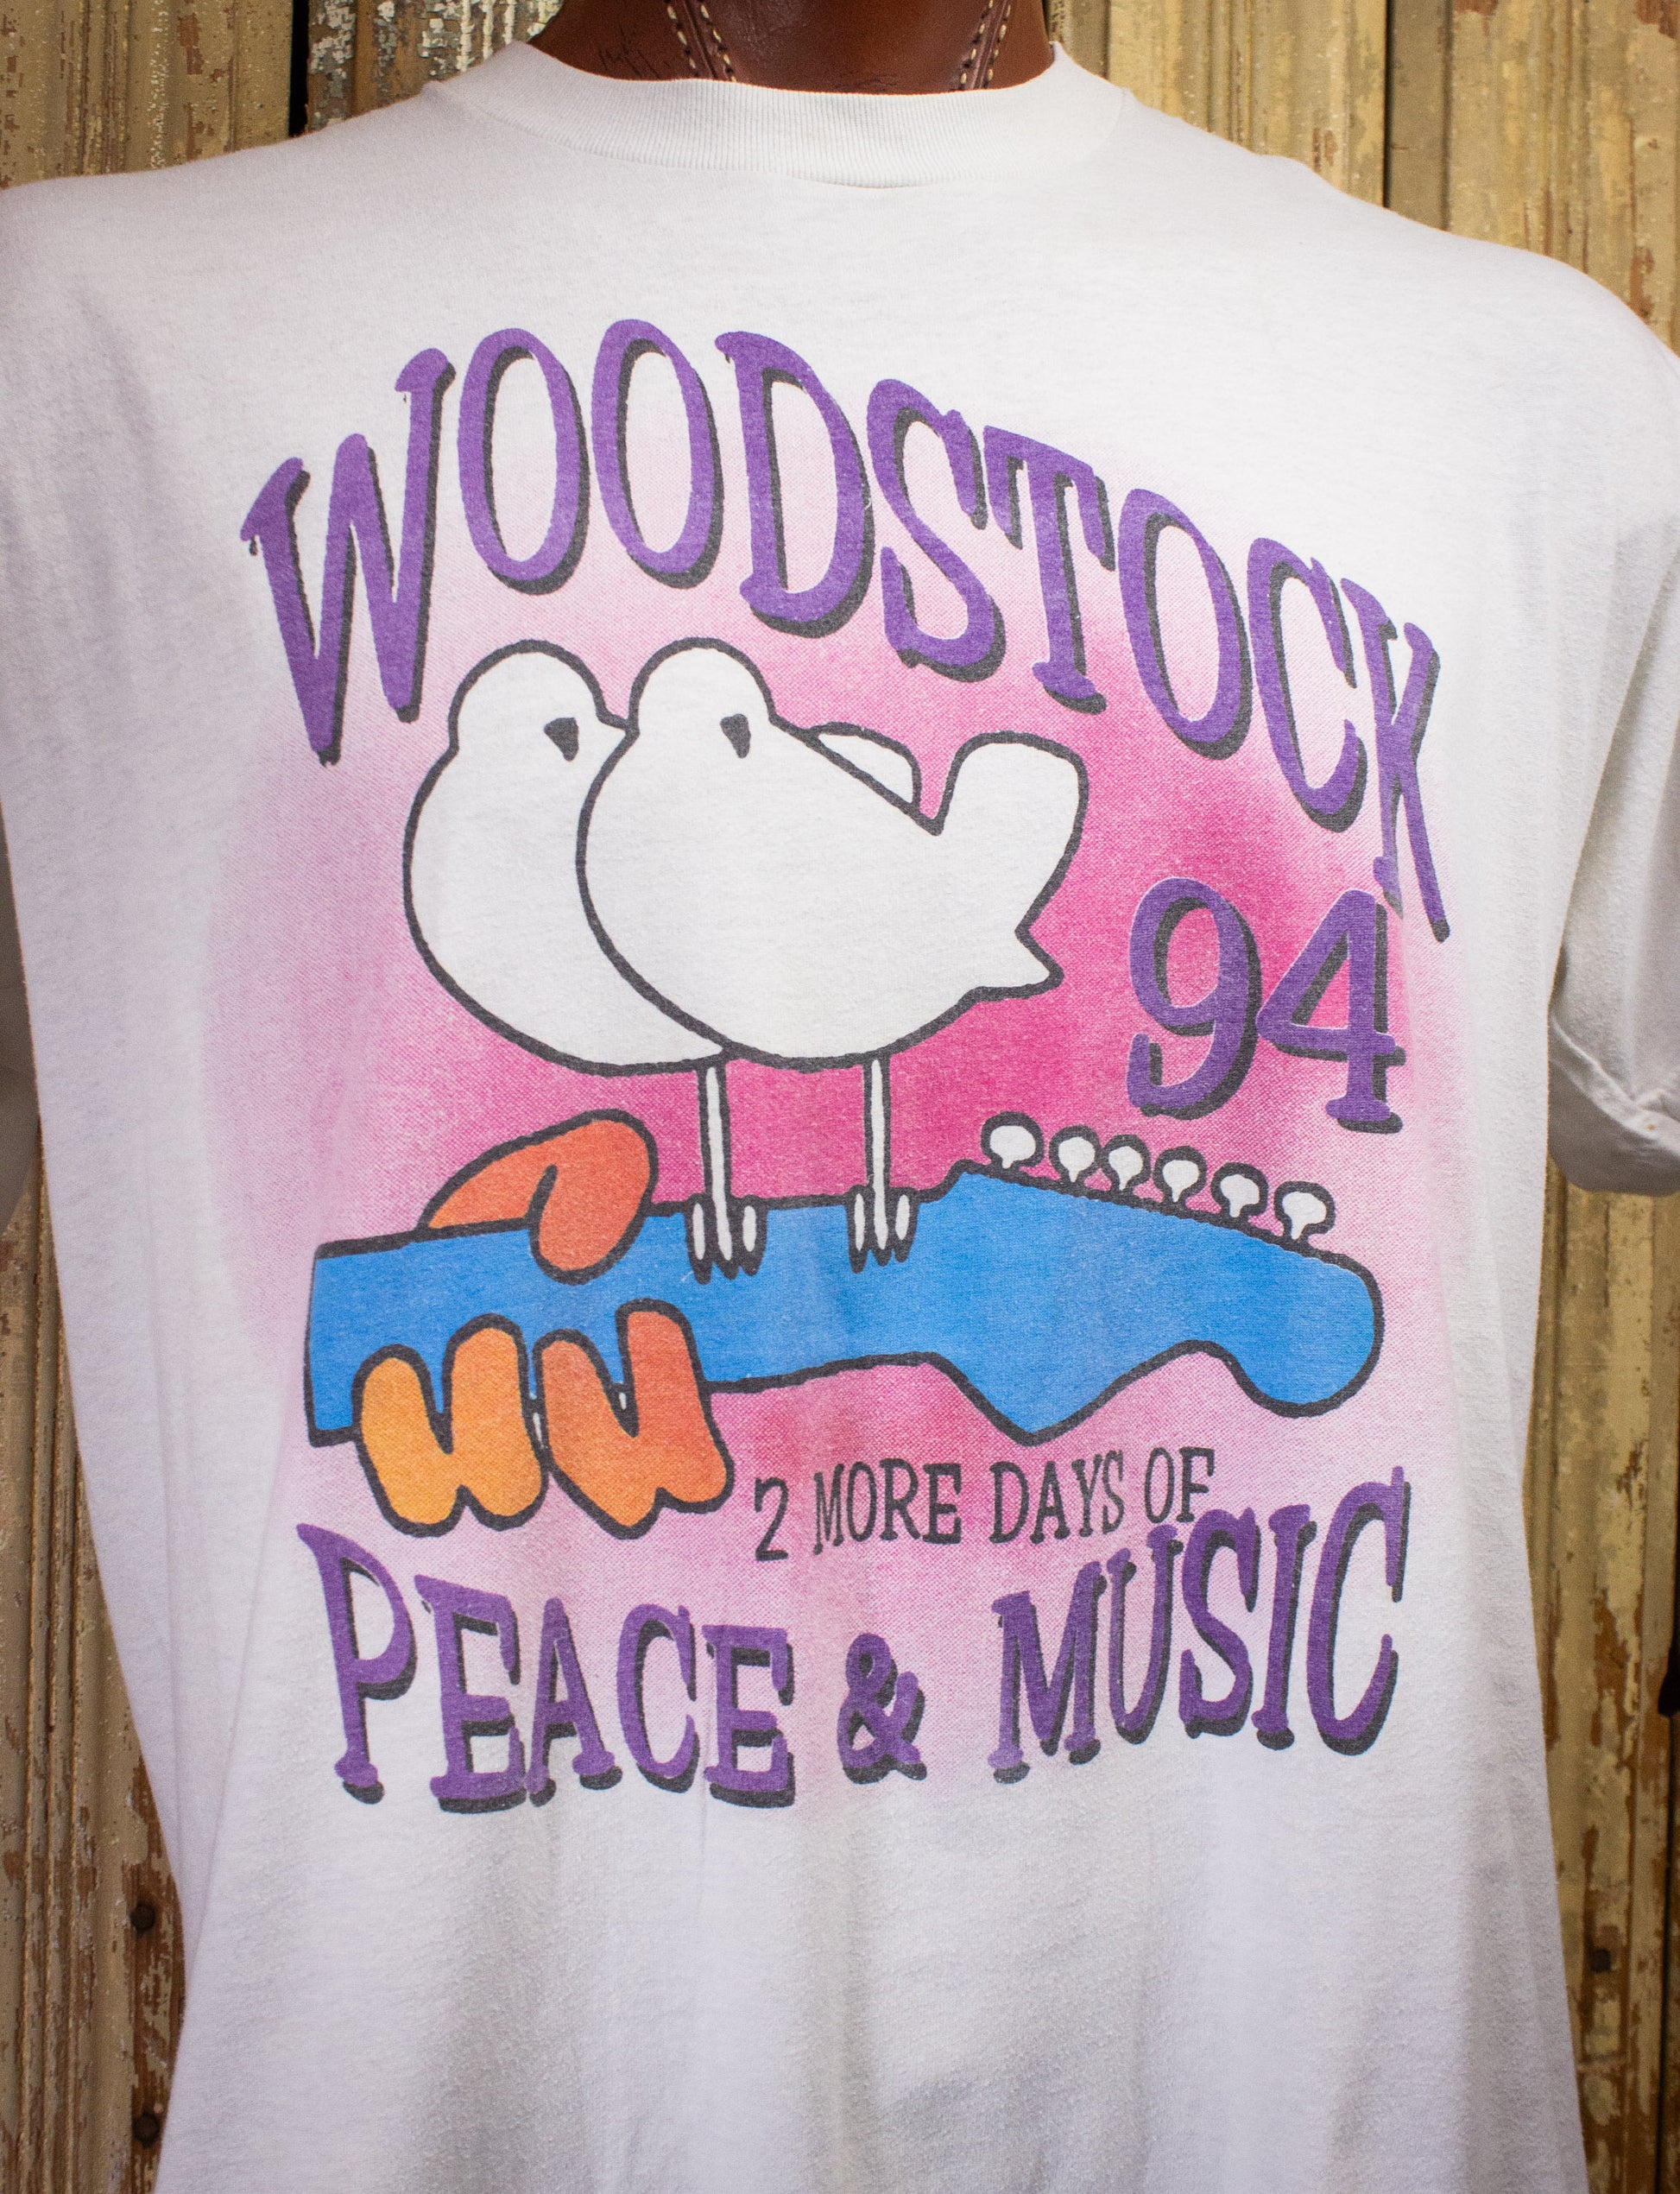 Vintage Woodstock '94 Concert T Shirt 1994 White XL